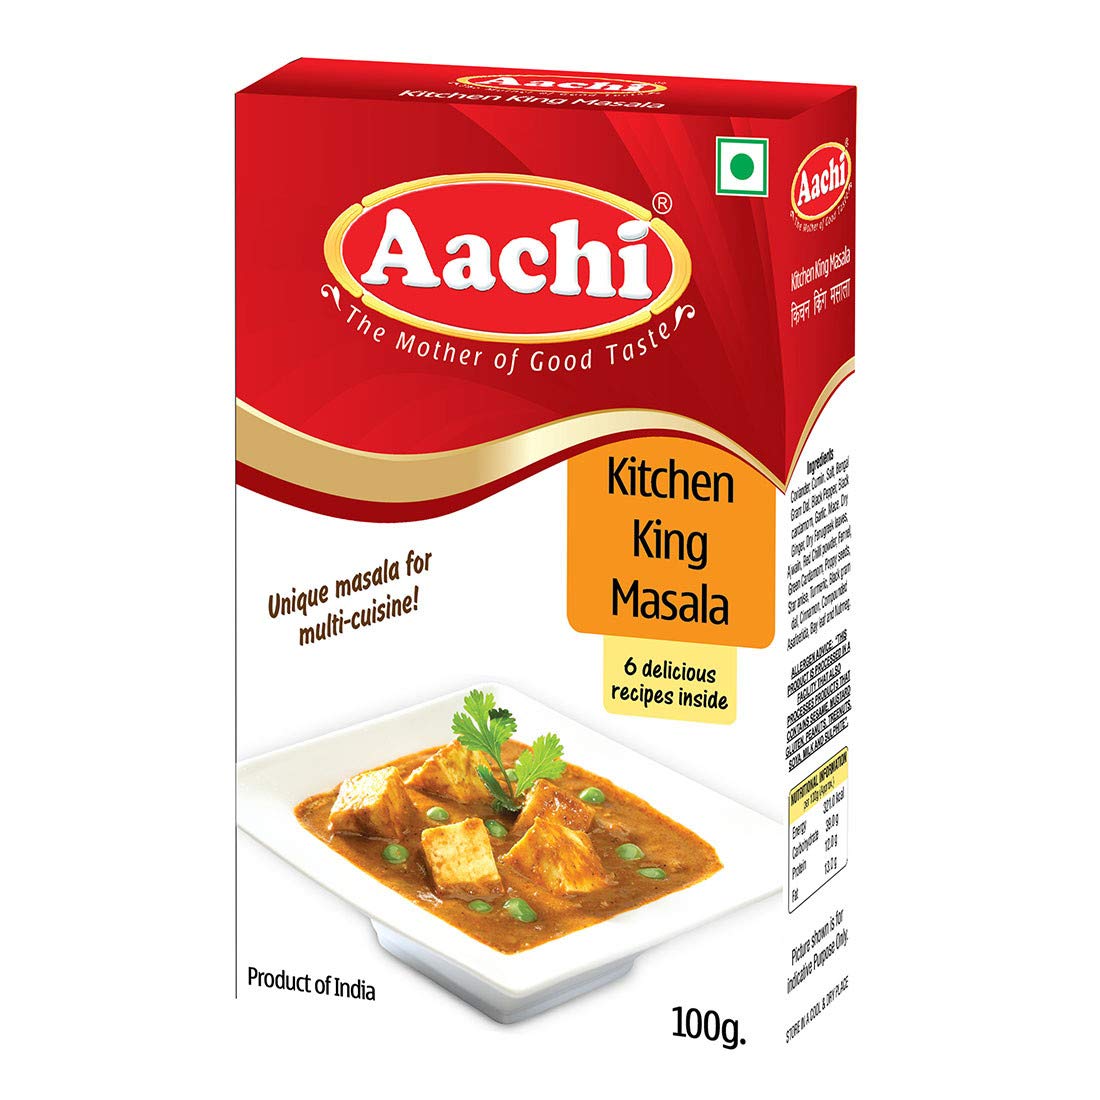 Aachi Kitchen King Masala (100g.)